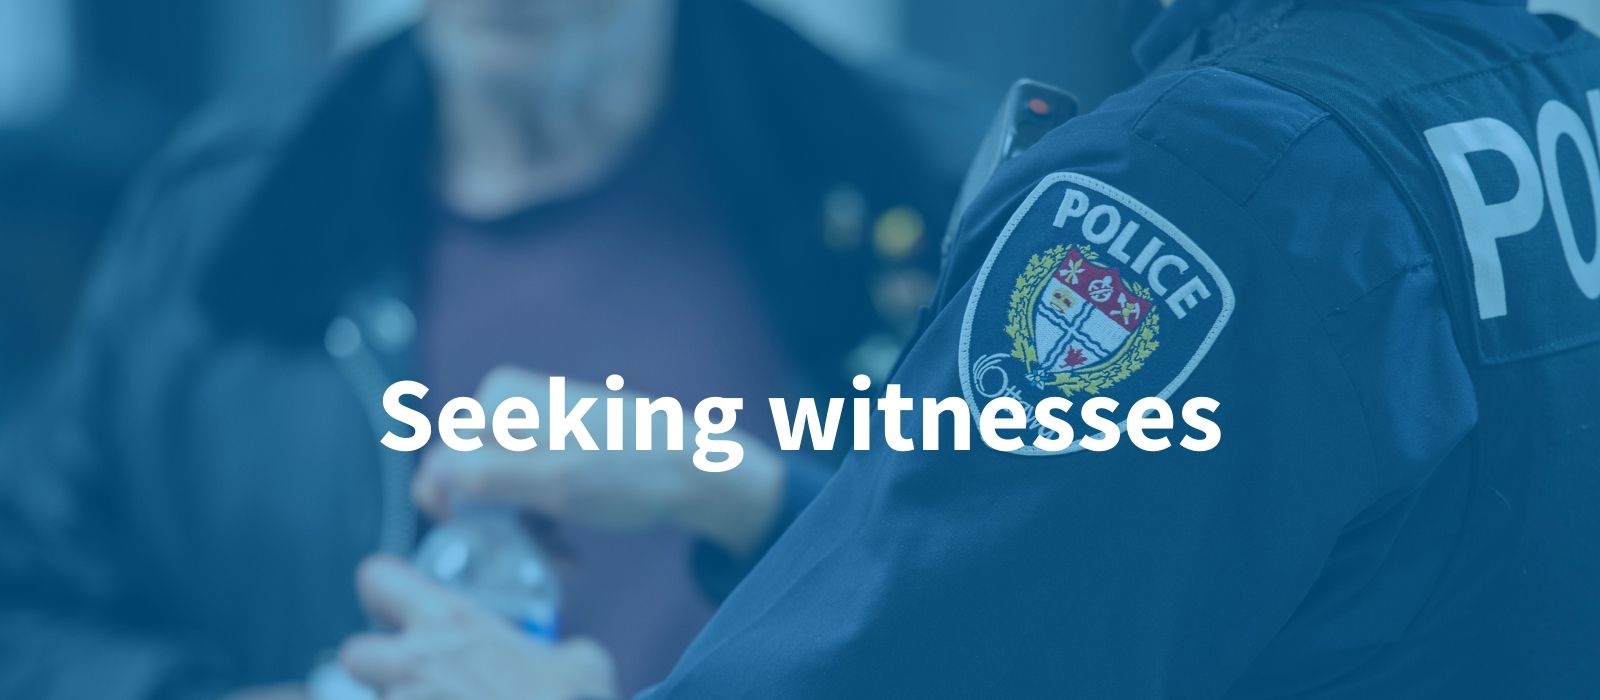 Seeking witnesses